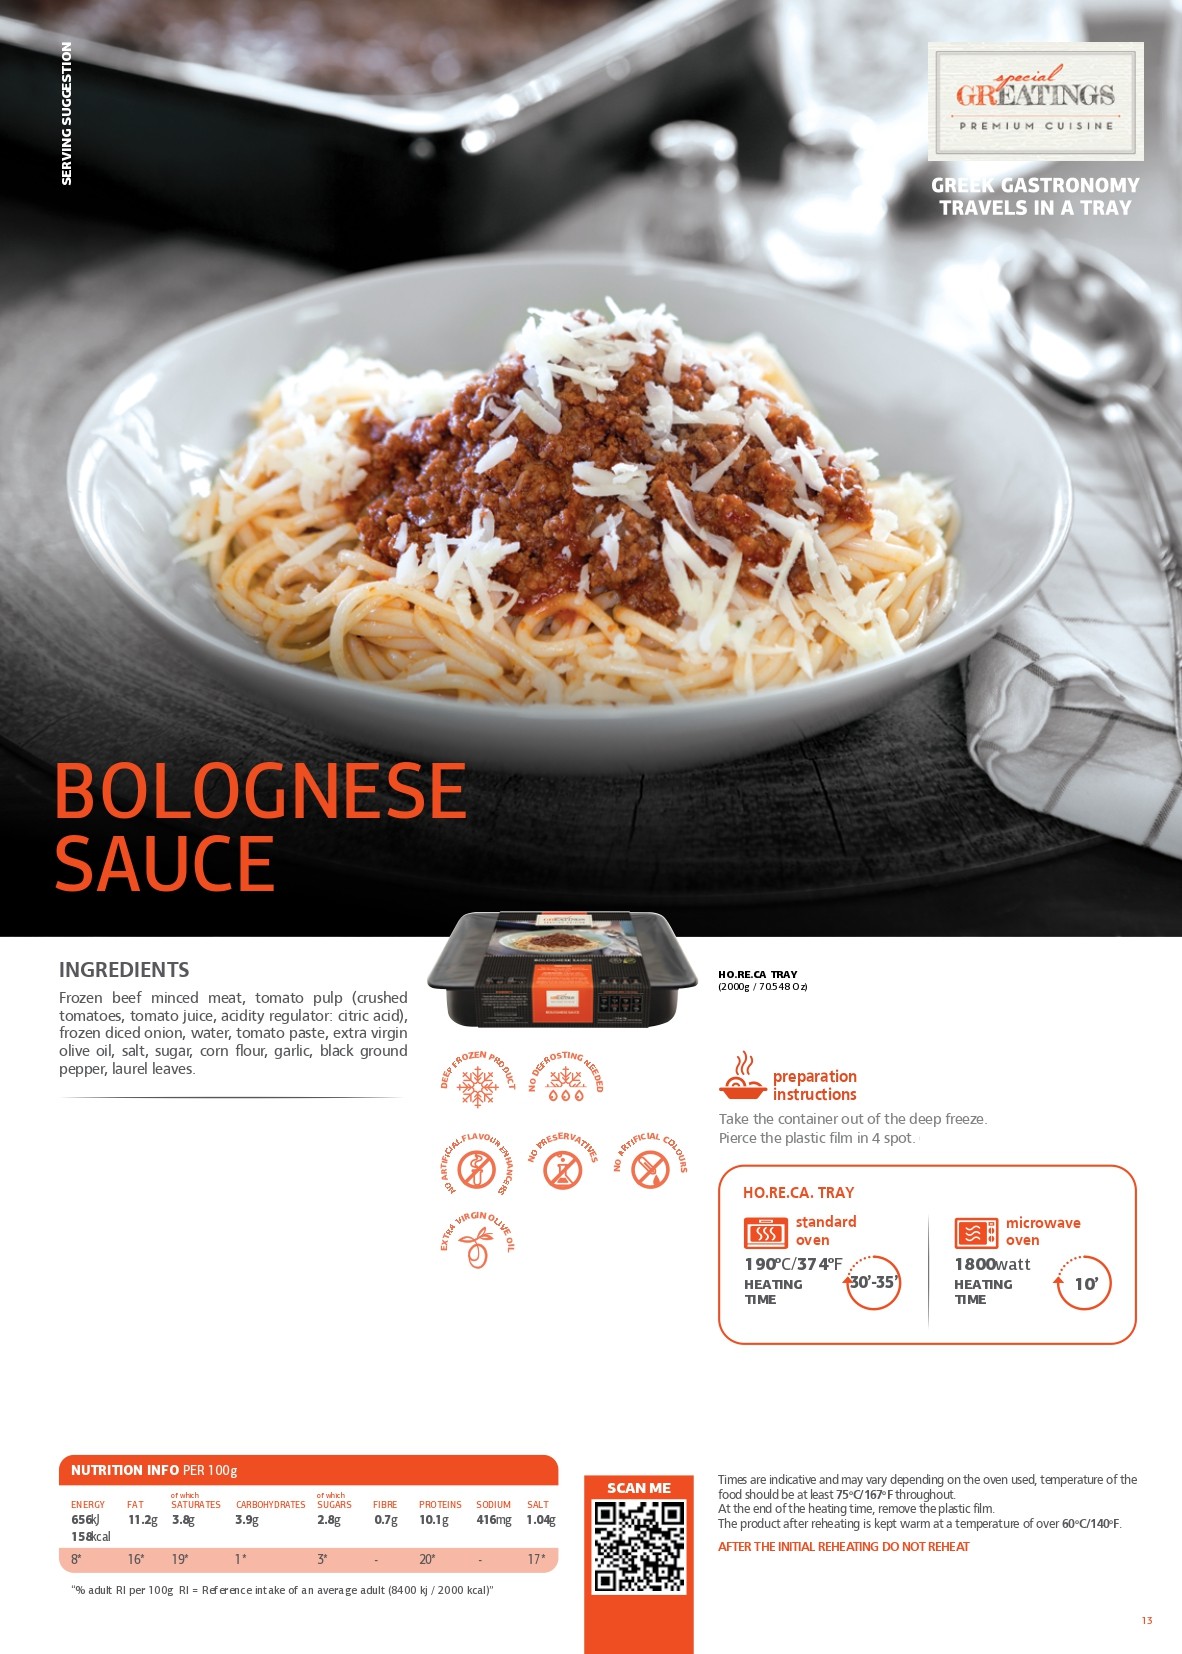 Bolognese sauce pdf image